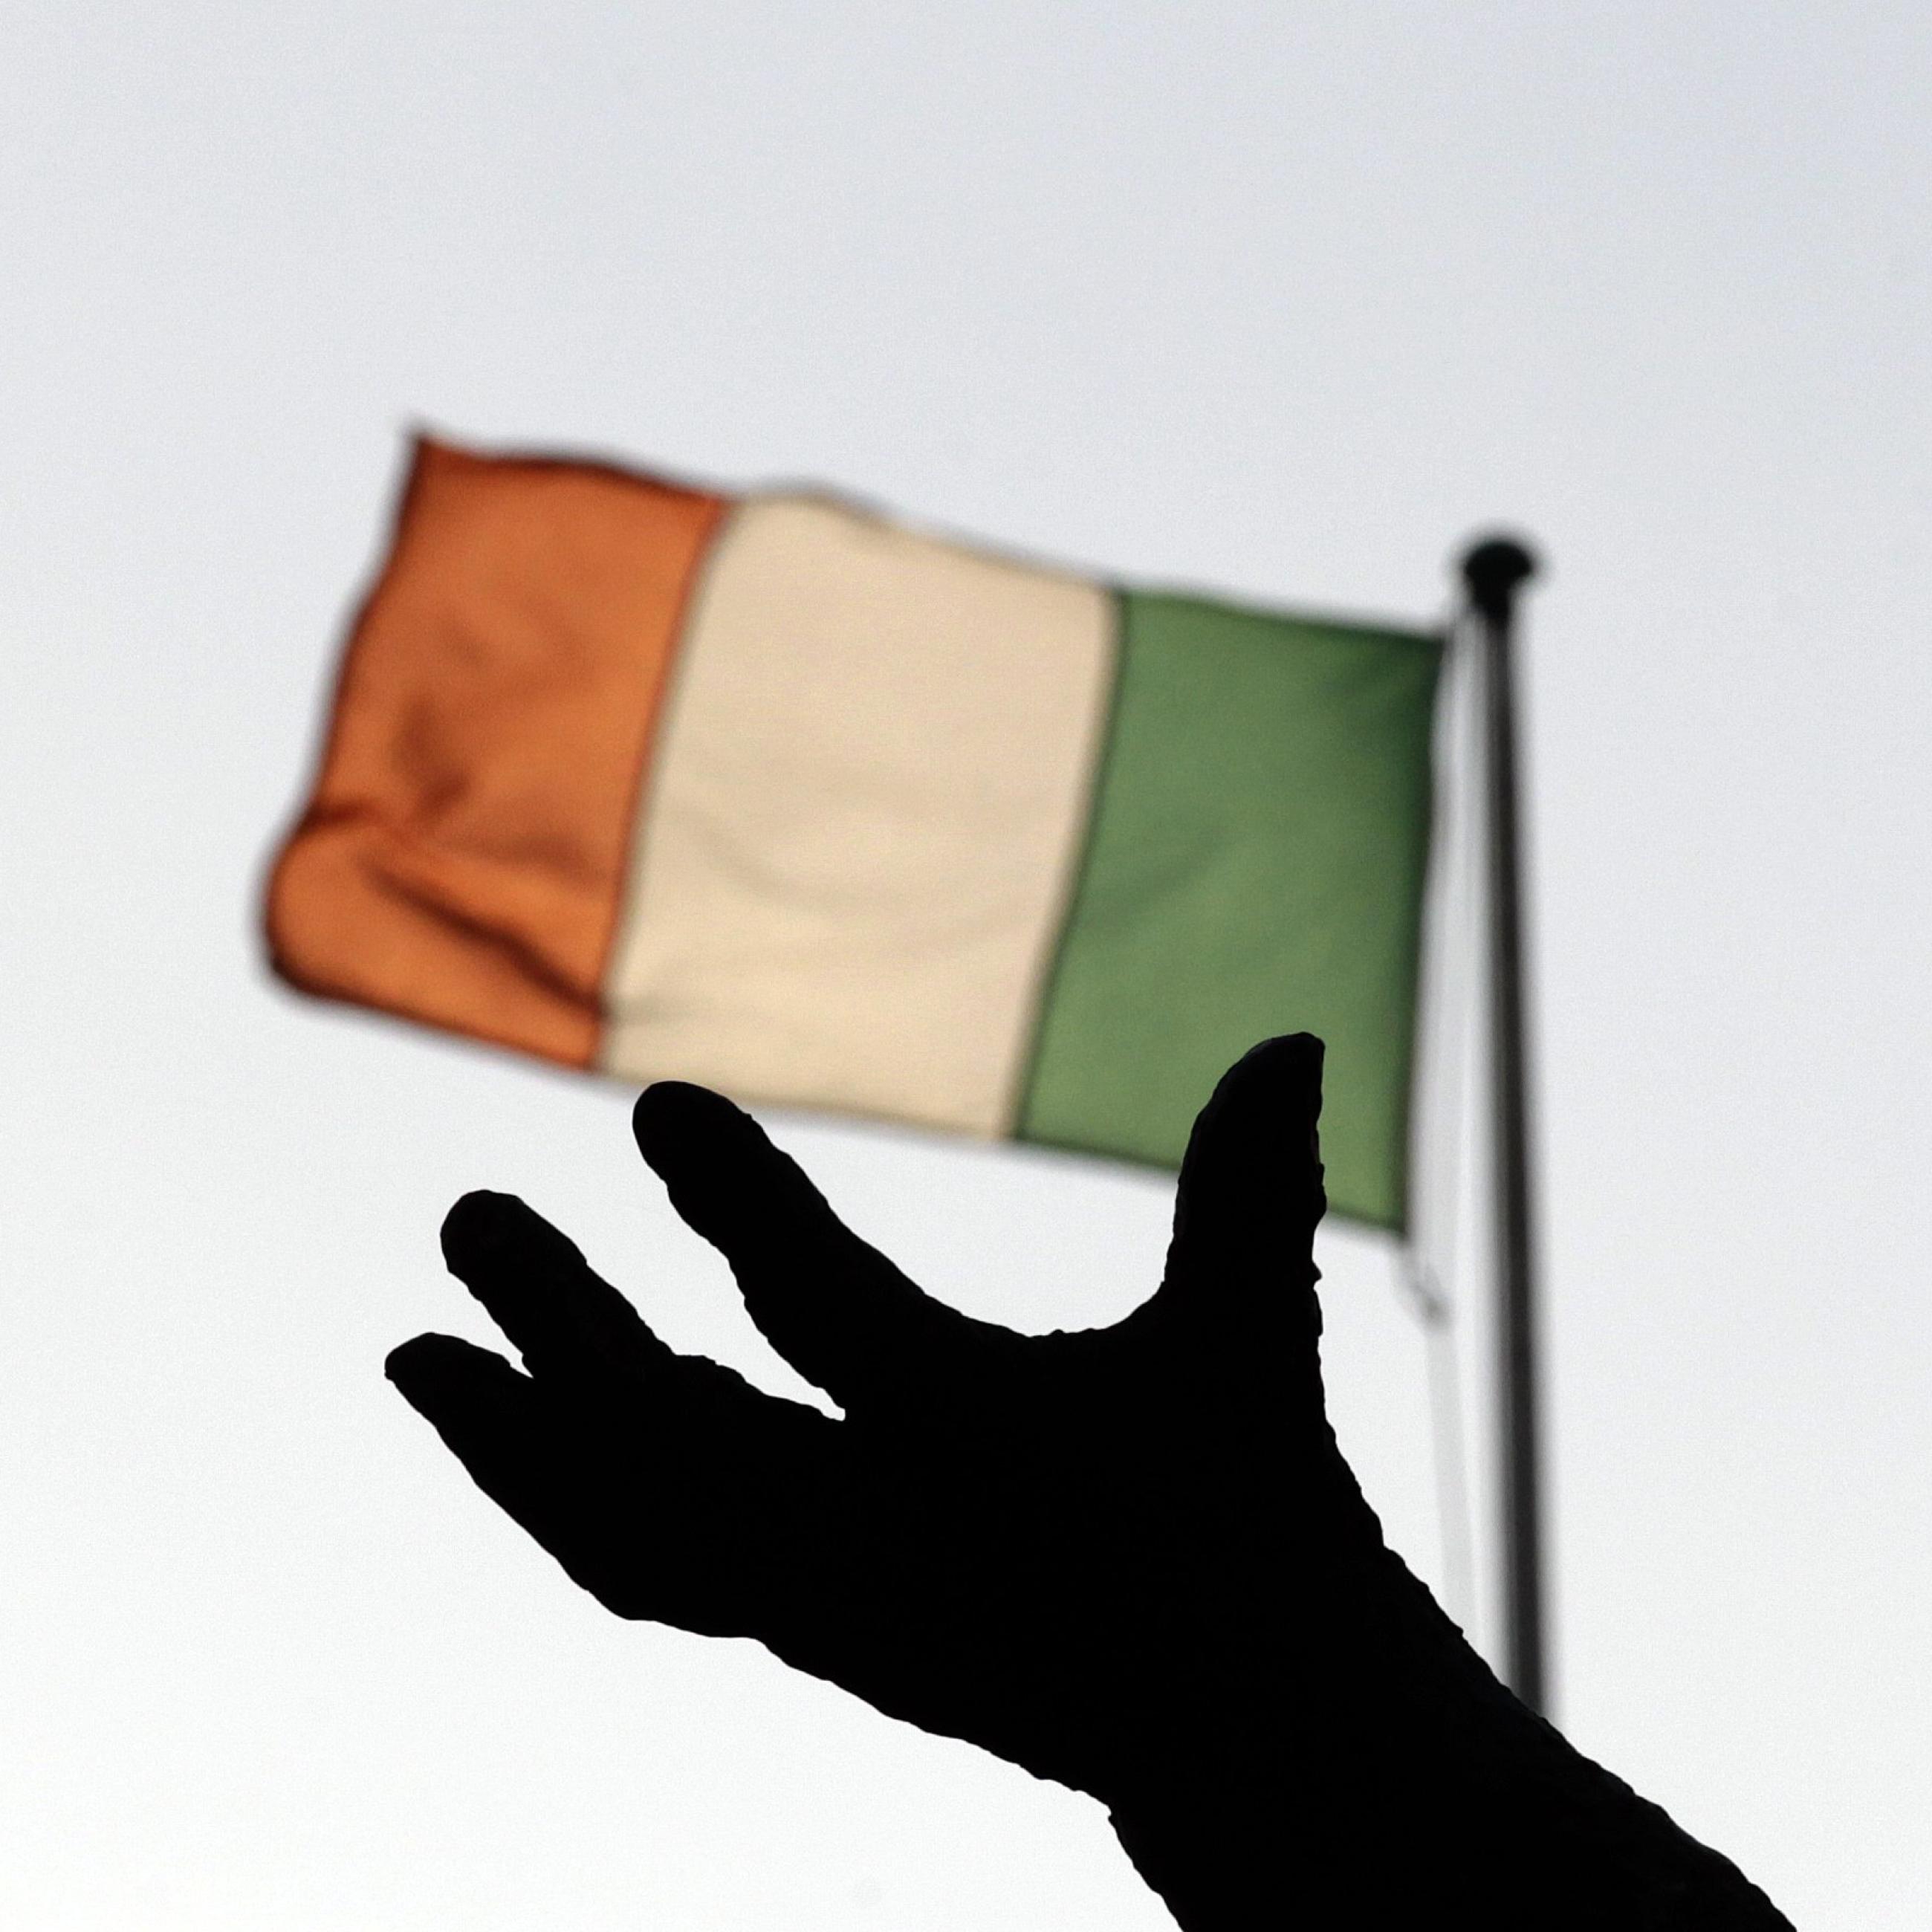 Ireland's national flag flies above a statue in Dublin